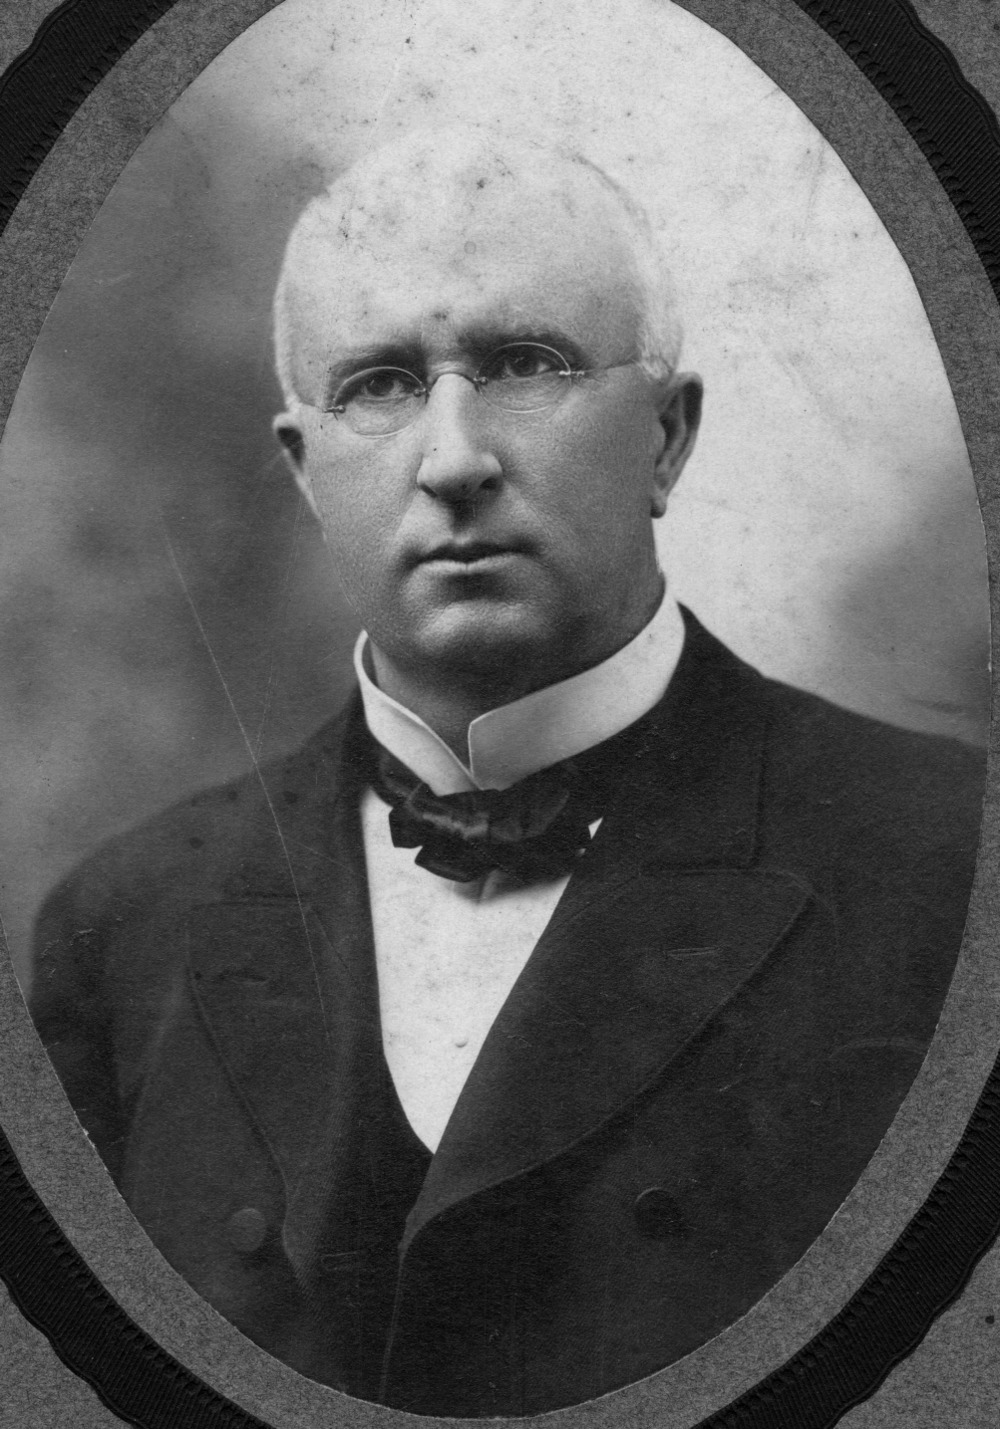 Black and white portrait of George Tayloe Winston